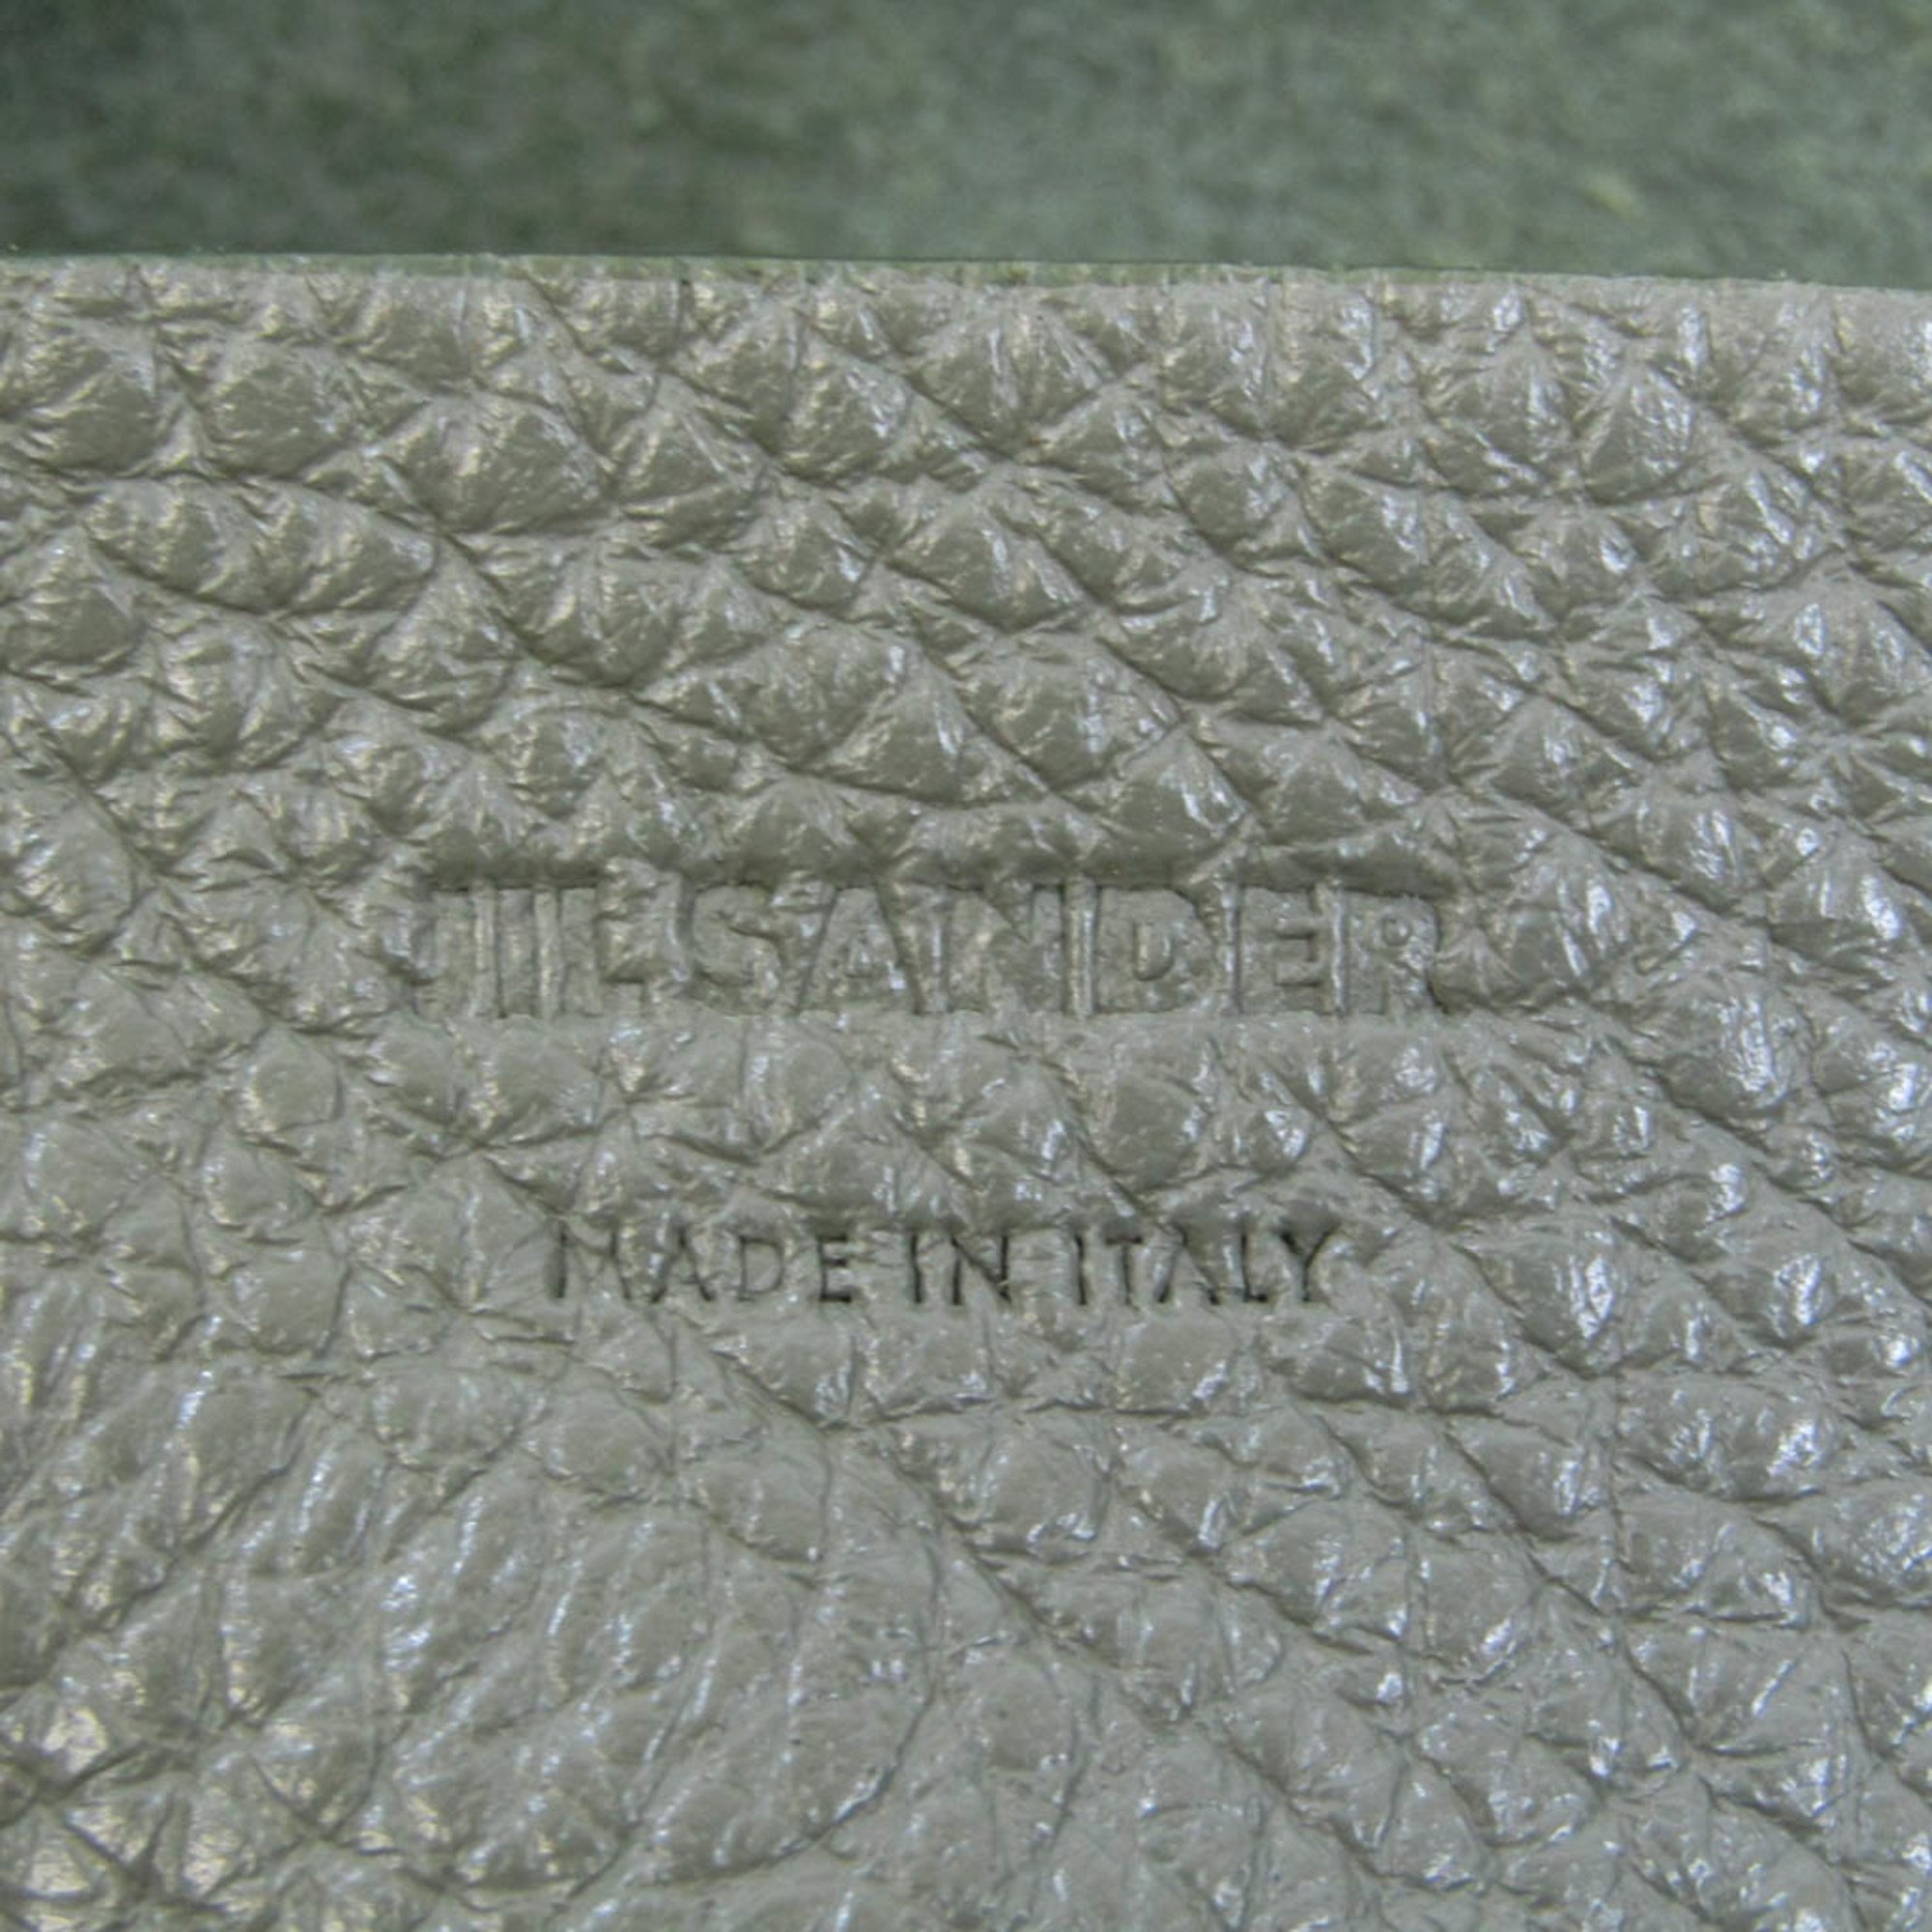 Jil Sander Women's Leather Tote Bag Green